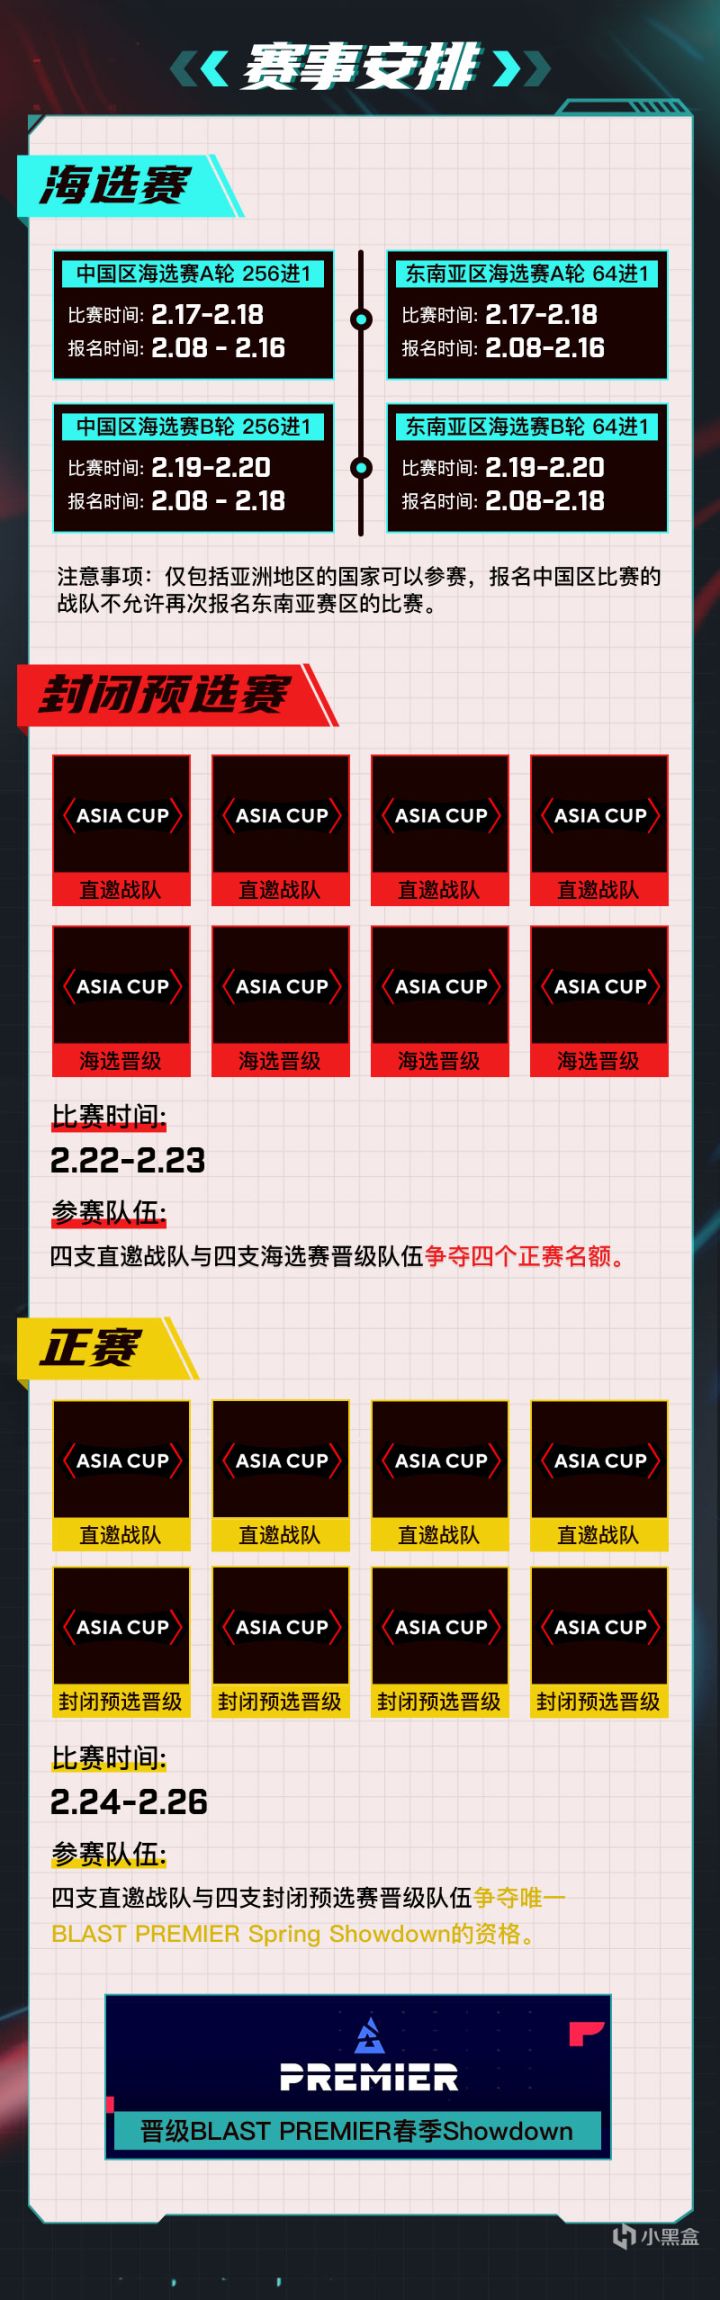 【CS:GO】5E對戰平臺 BLAST亞洲預選賽報名正式開啟-第1張